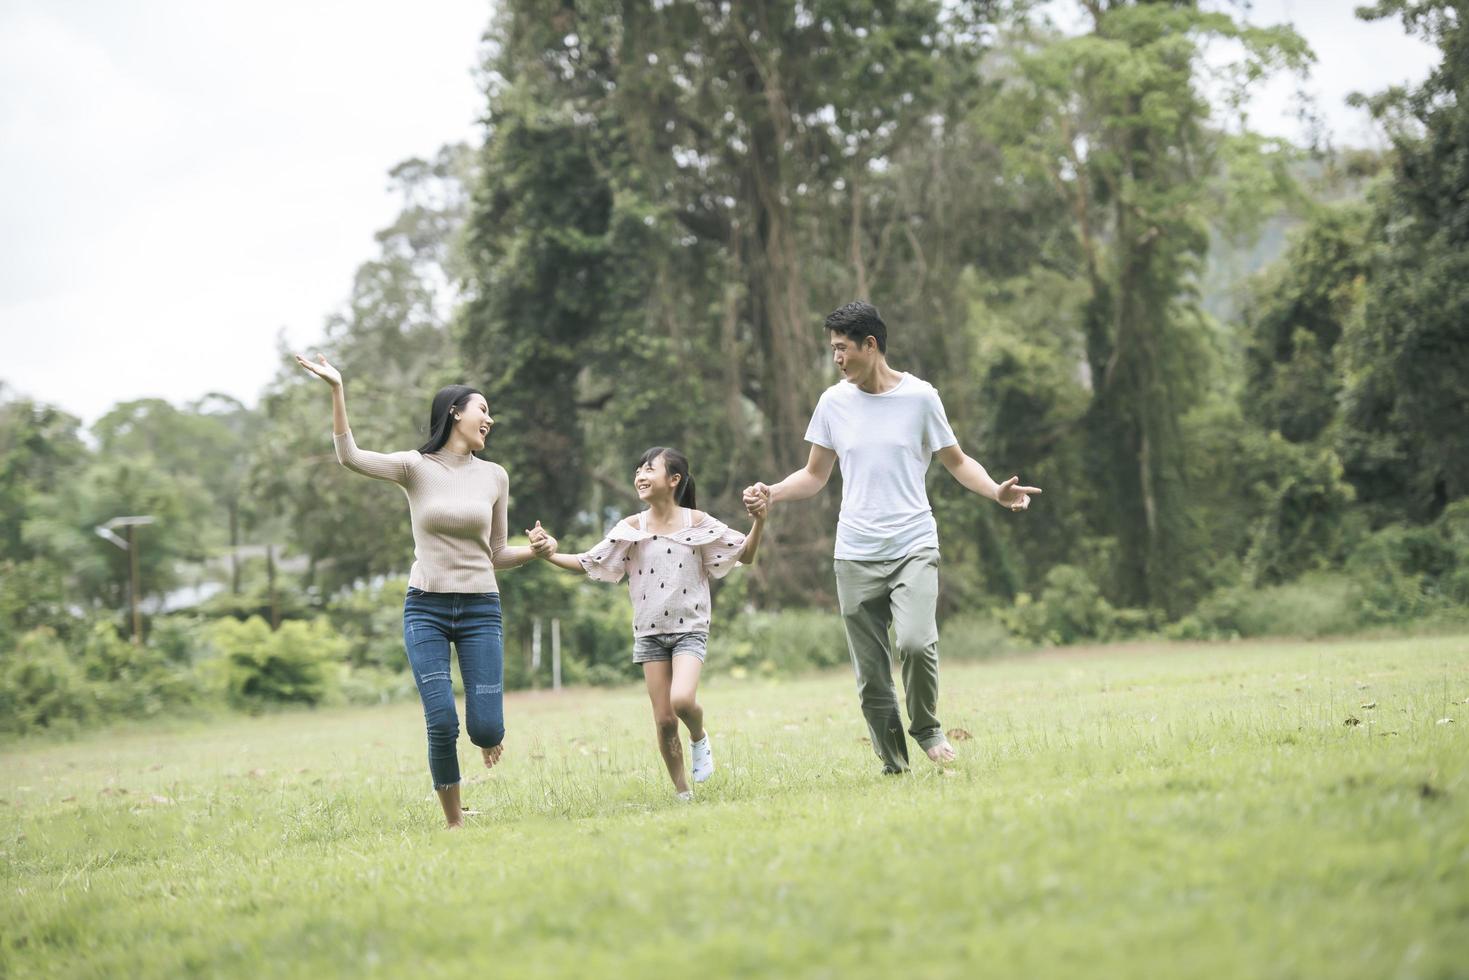 la familia feliz se divierte madre, padre e hija corren en el parque. foto